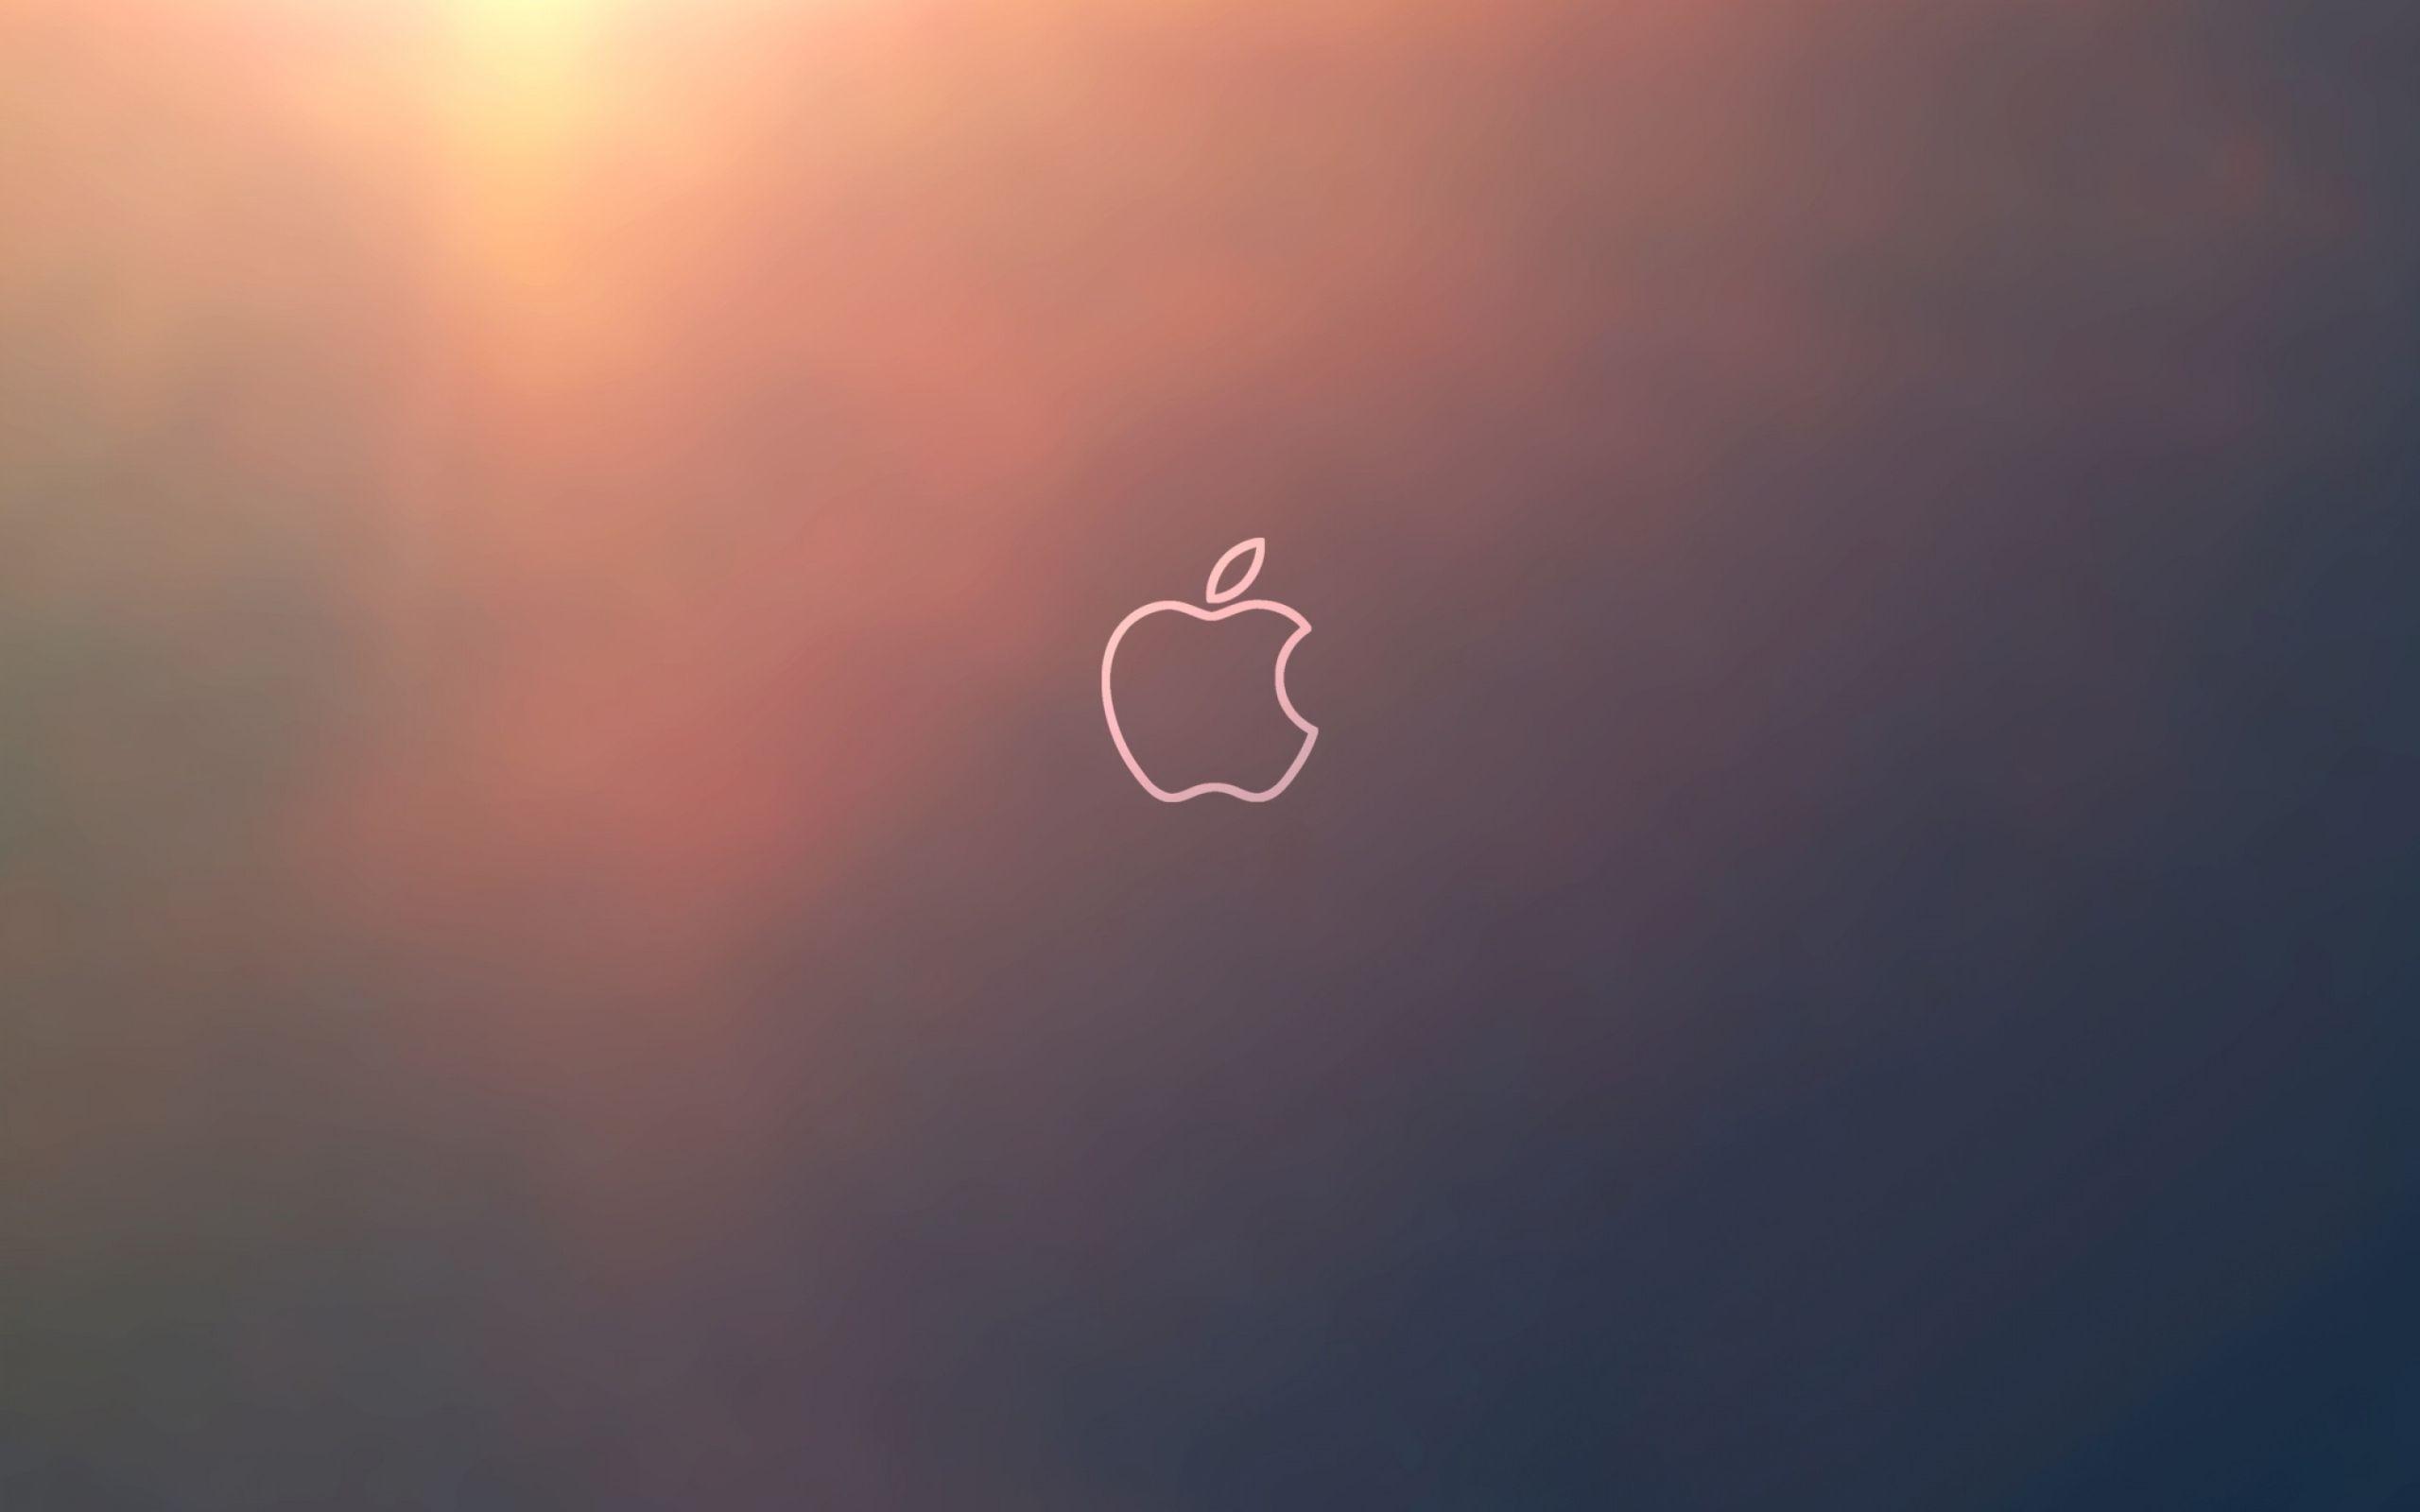 Apple macbook background hd 5770 1gb gddr5